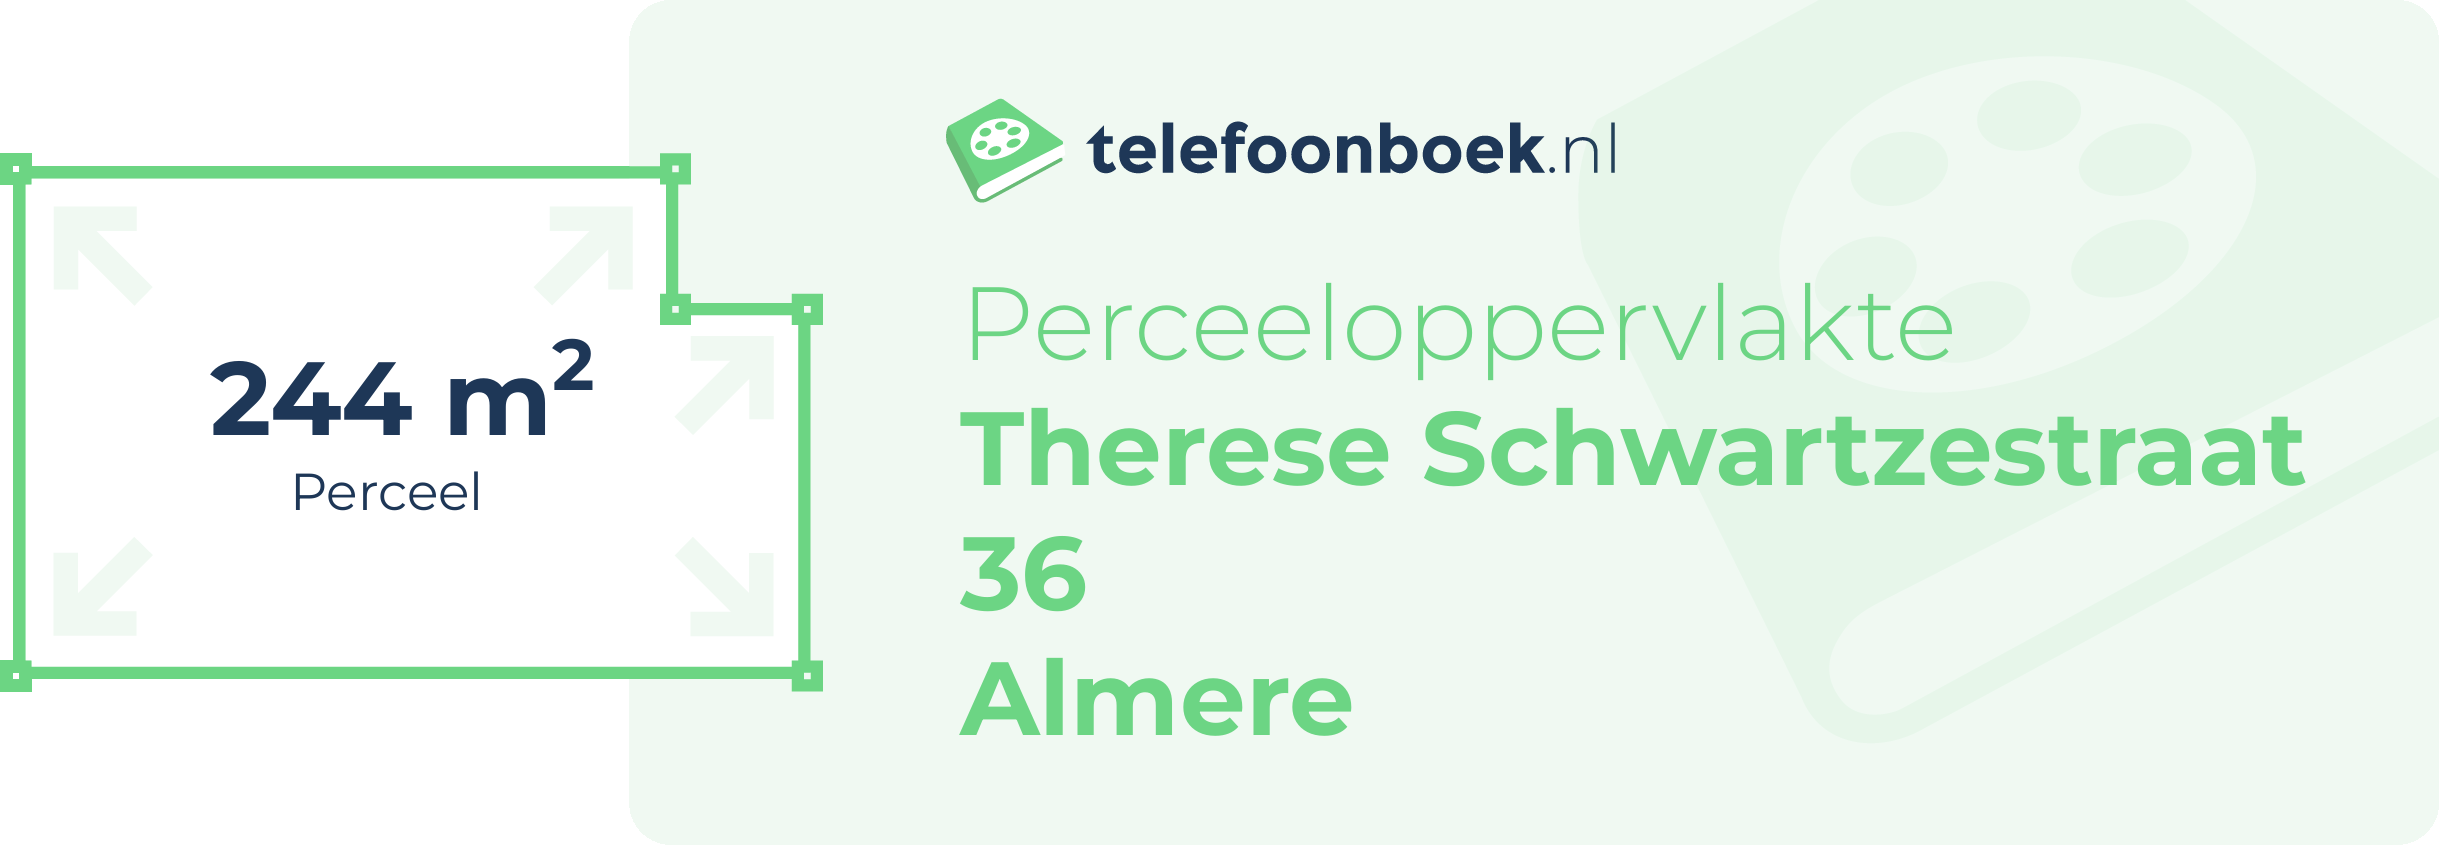 Perceeloppervlakte Therese Schwartzestraat 36 Almere